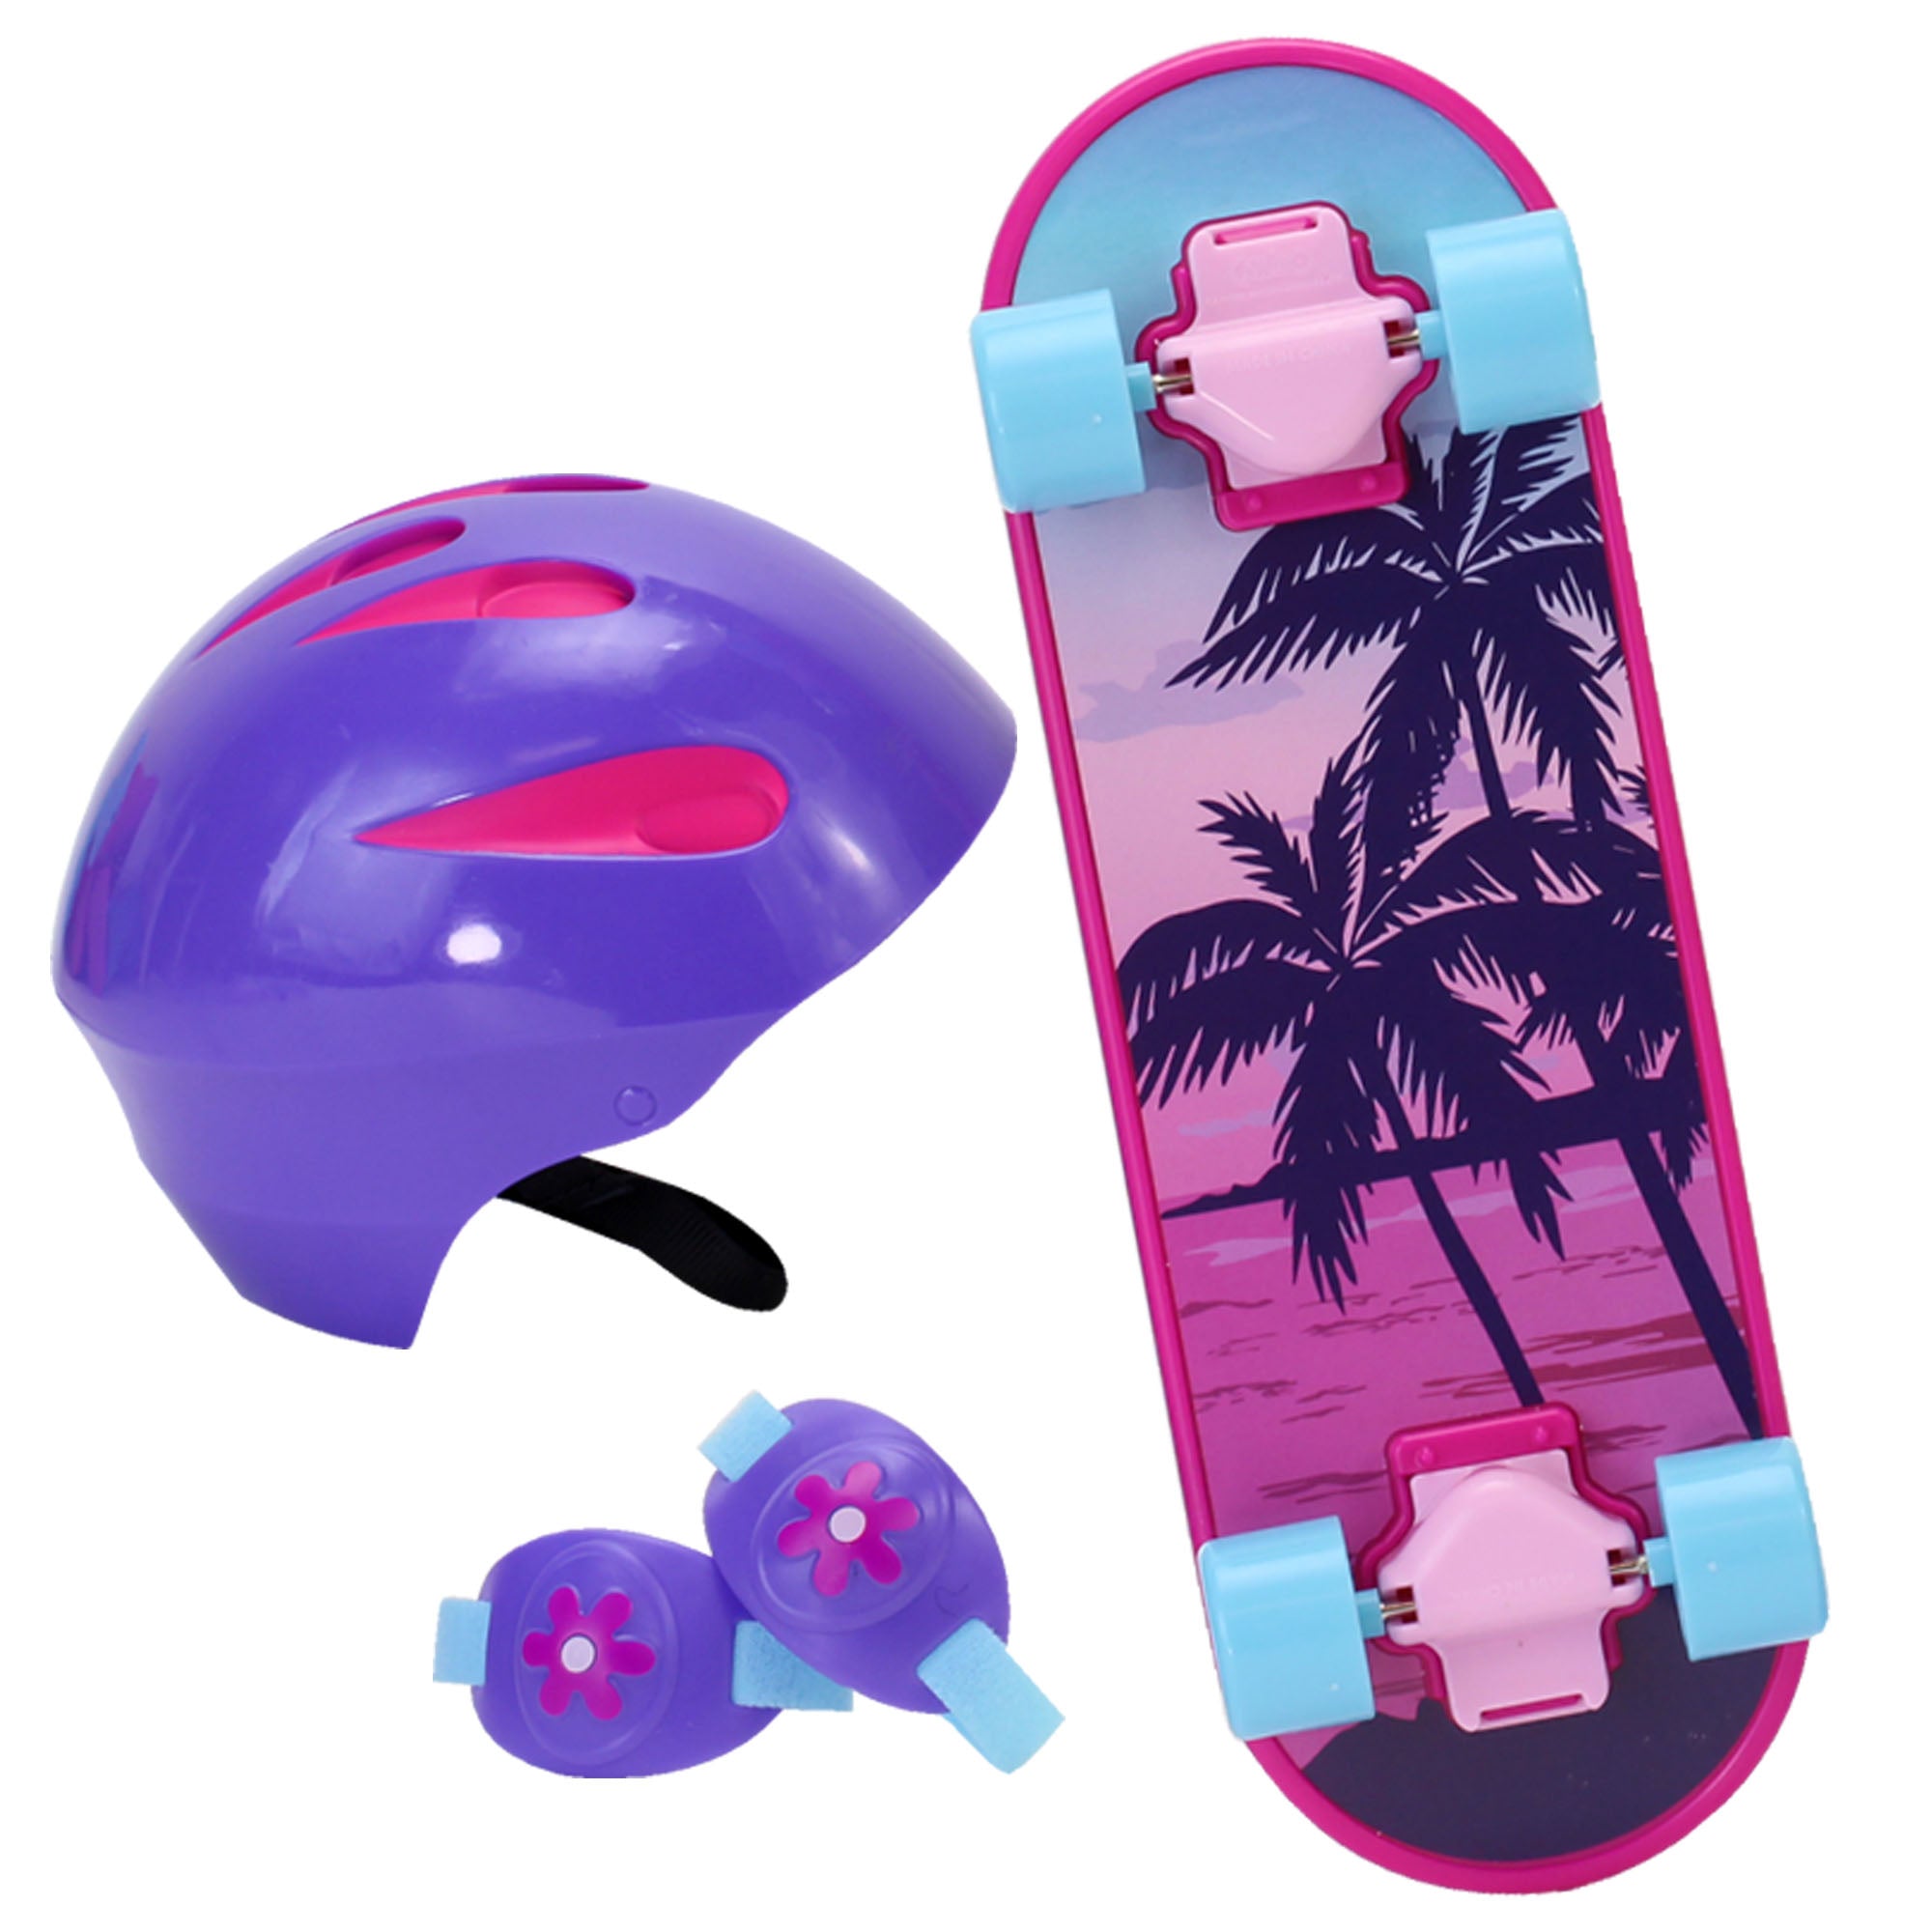 Sophia's Skateboard, Helmet and Knee Pads Set for 18" Dolls, Multicolor